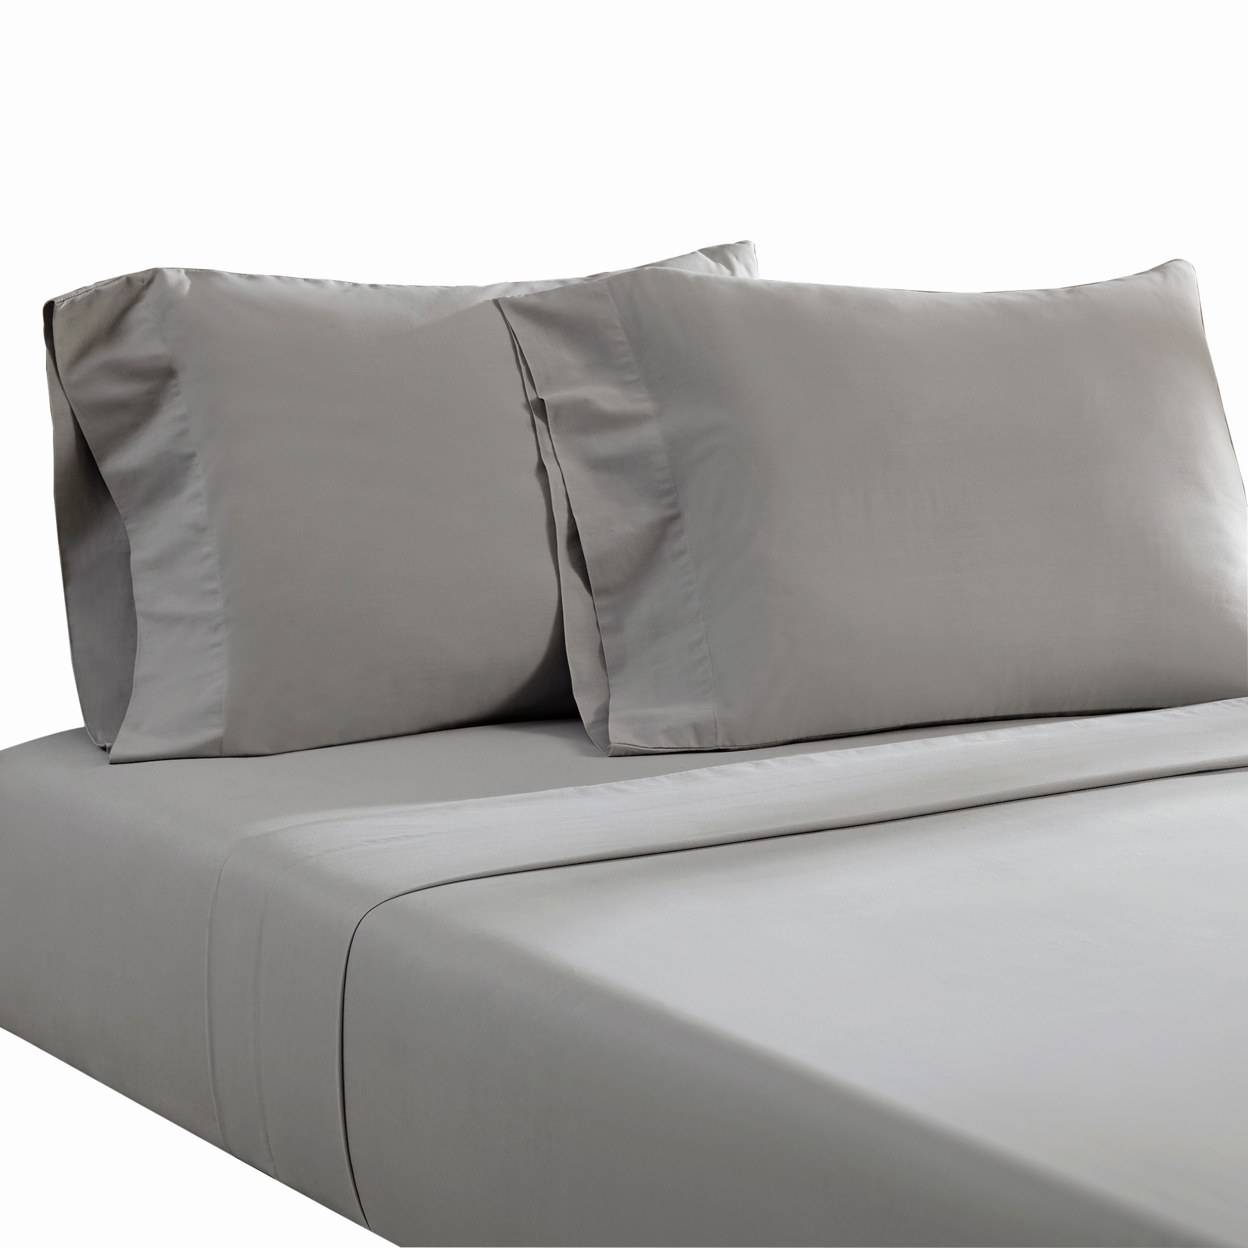 Ivy 4 Piece King Size Cotton Ultra Soft Bed Sheet Set, Prewashed, Dark Gray- Saltoro Sherpi